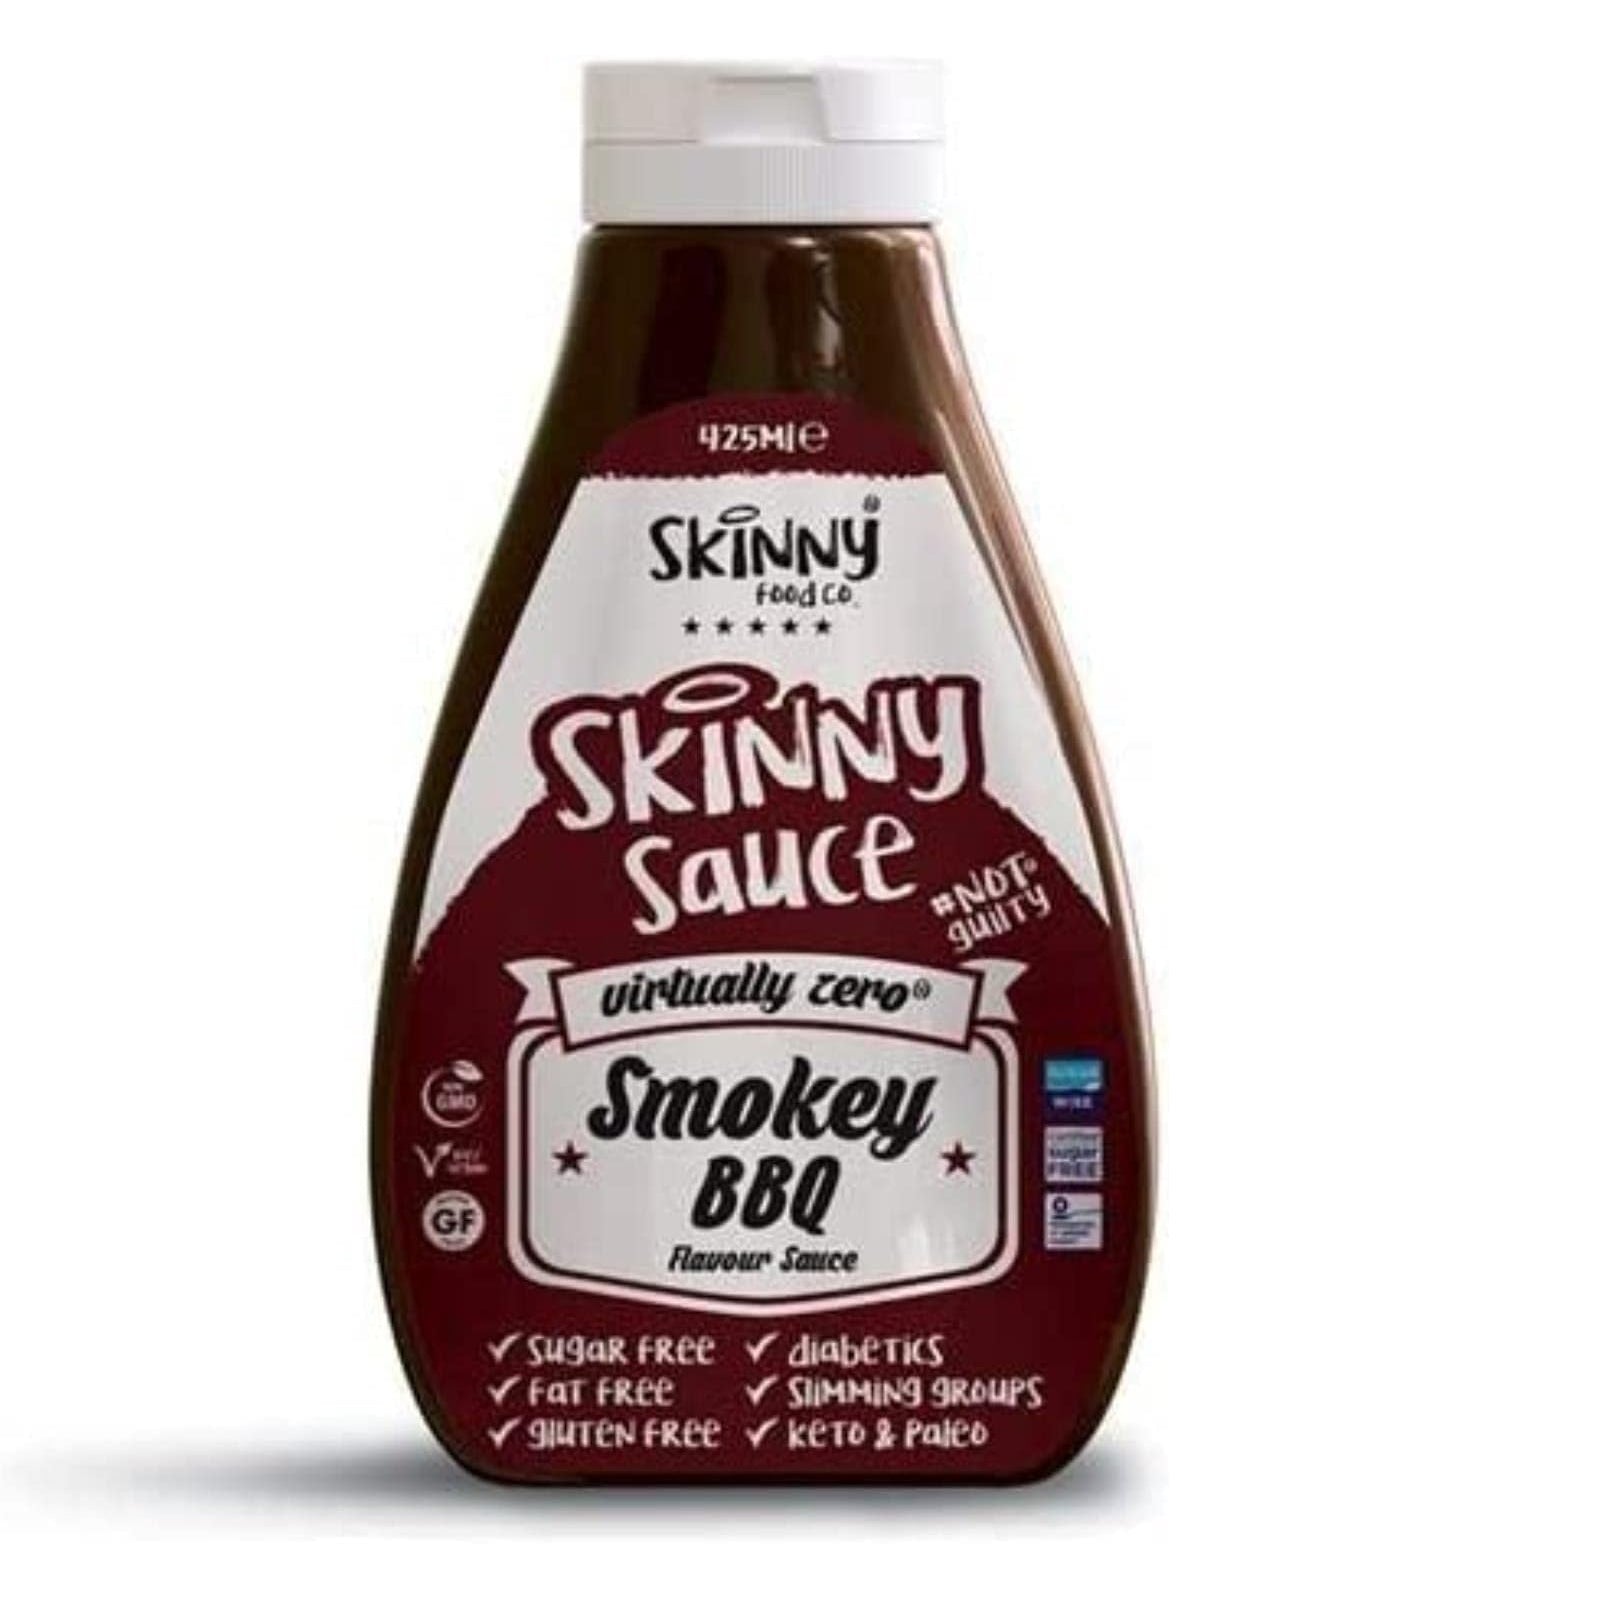 The Skinny Food Co. Zero Calorie Sauce Smokey Bbq Sauce / 425ml